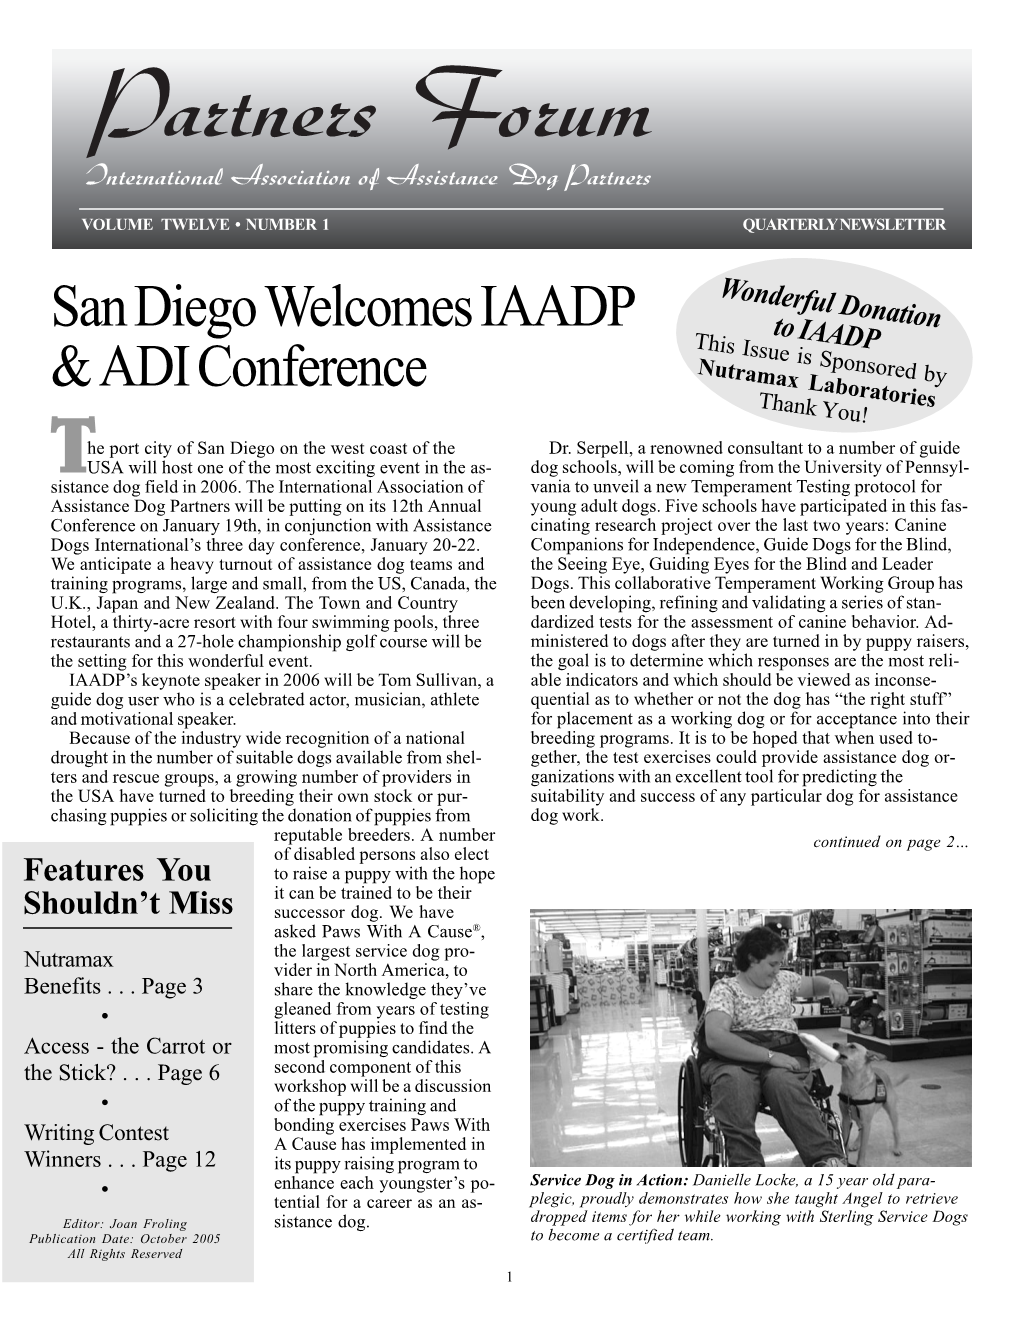 San Diego Welcomes IAADP & ADI Conference